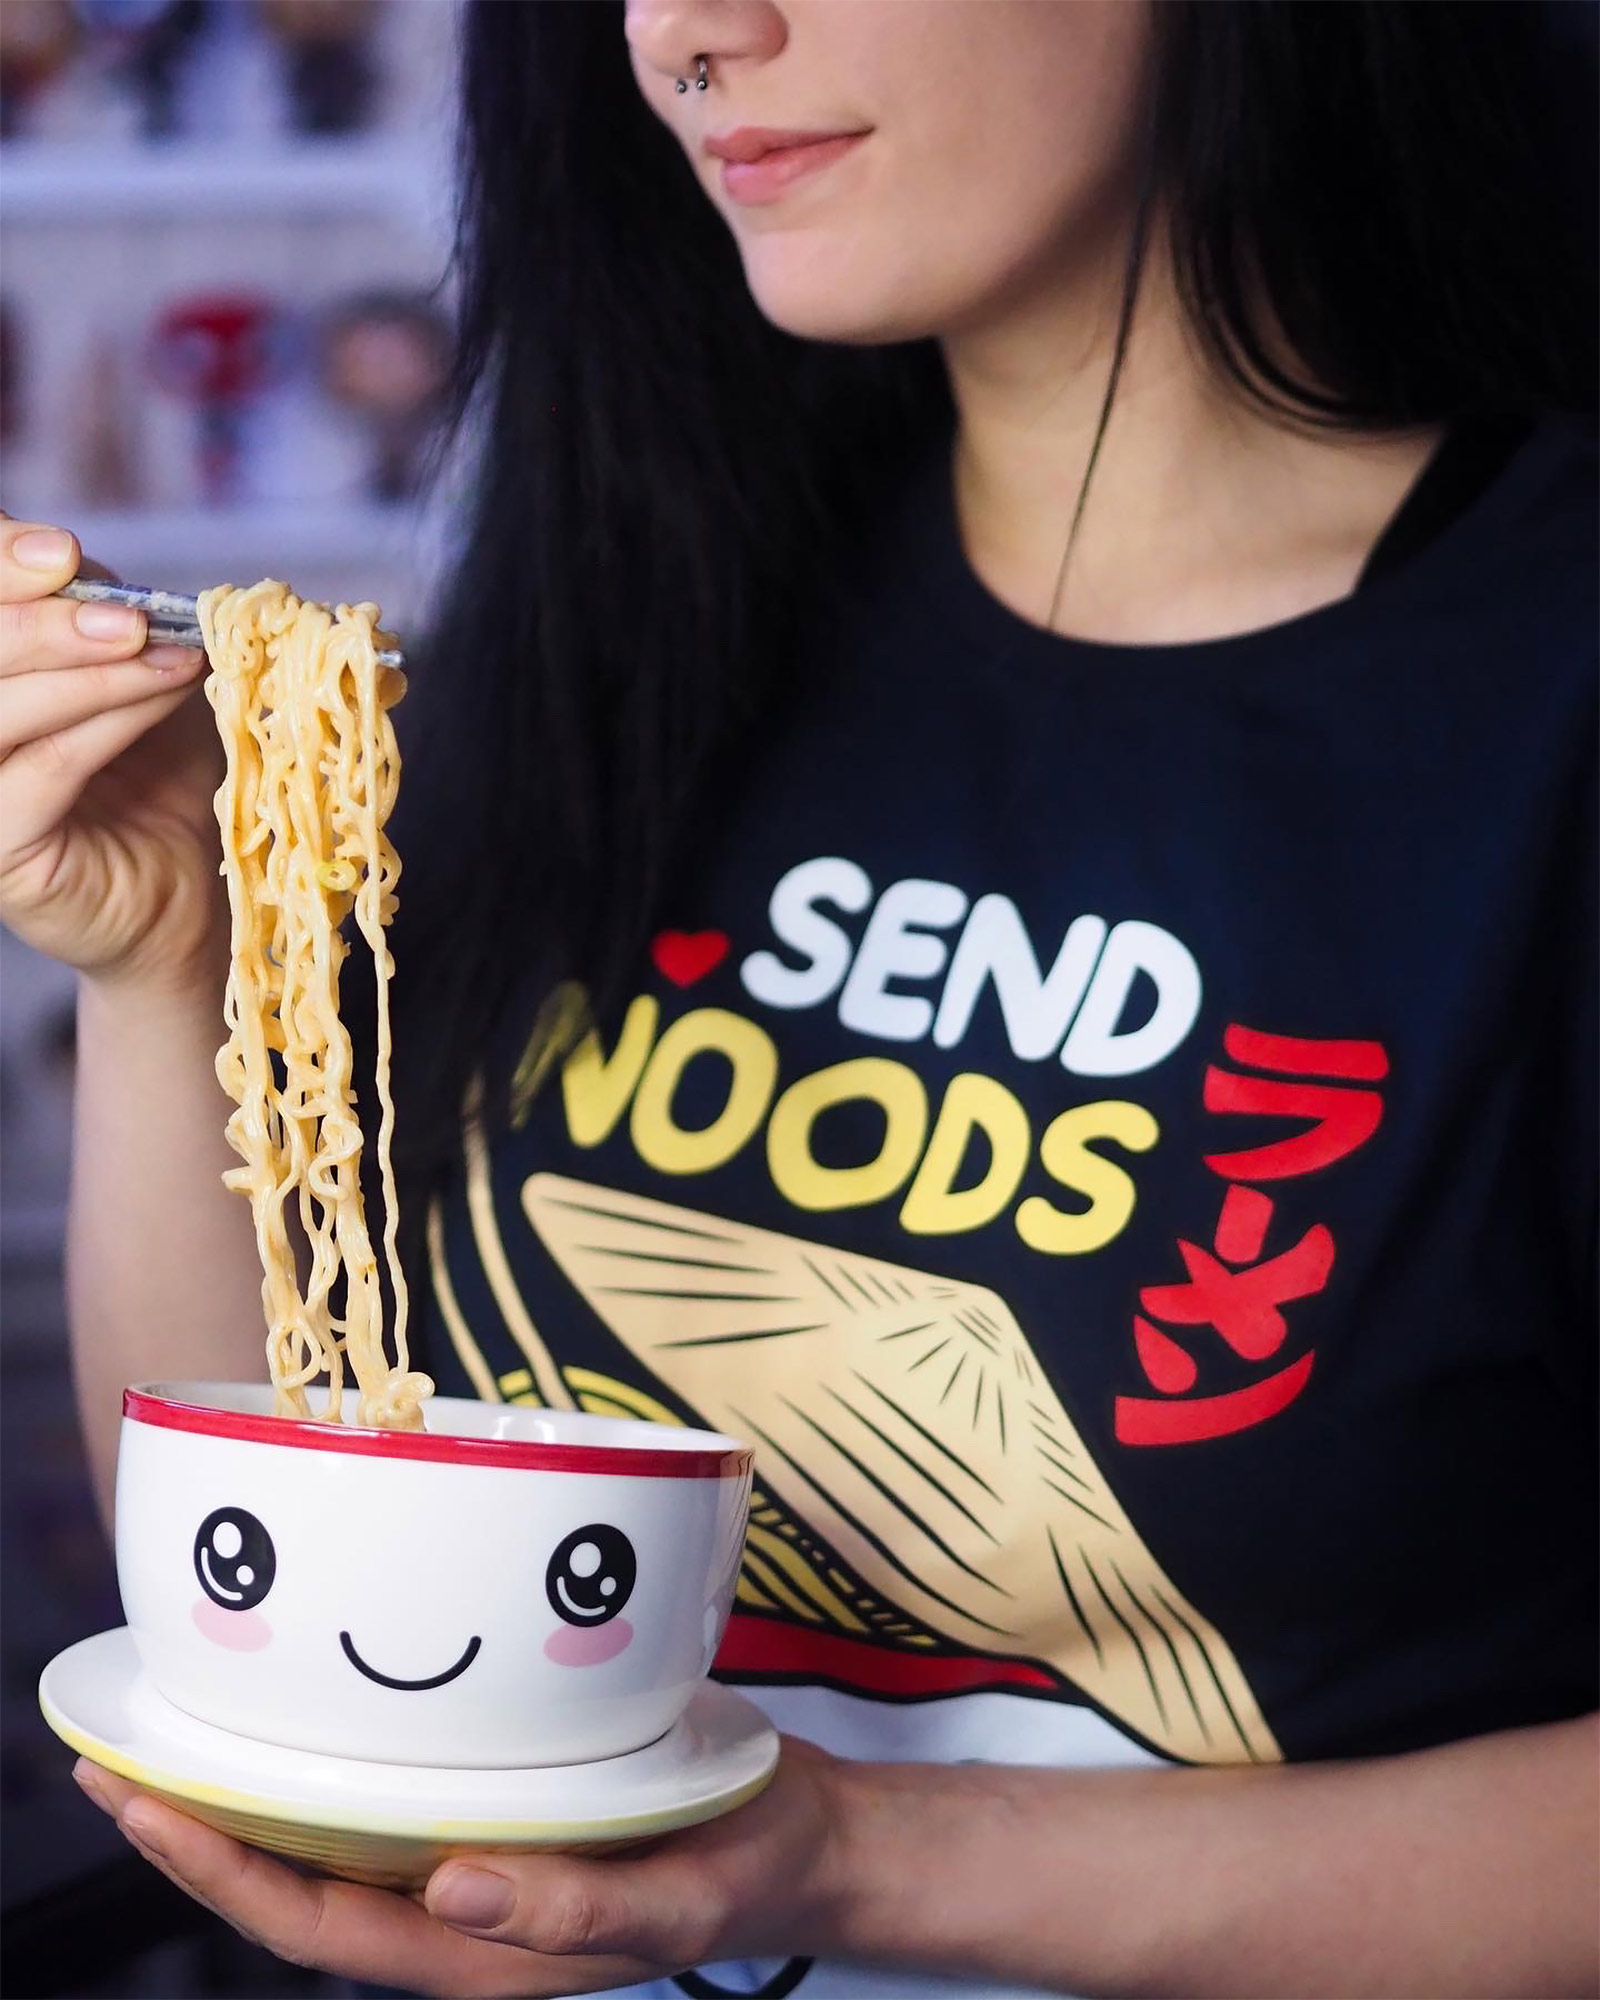 Send Noods Ramen T-shirt voor anime fans blauw